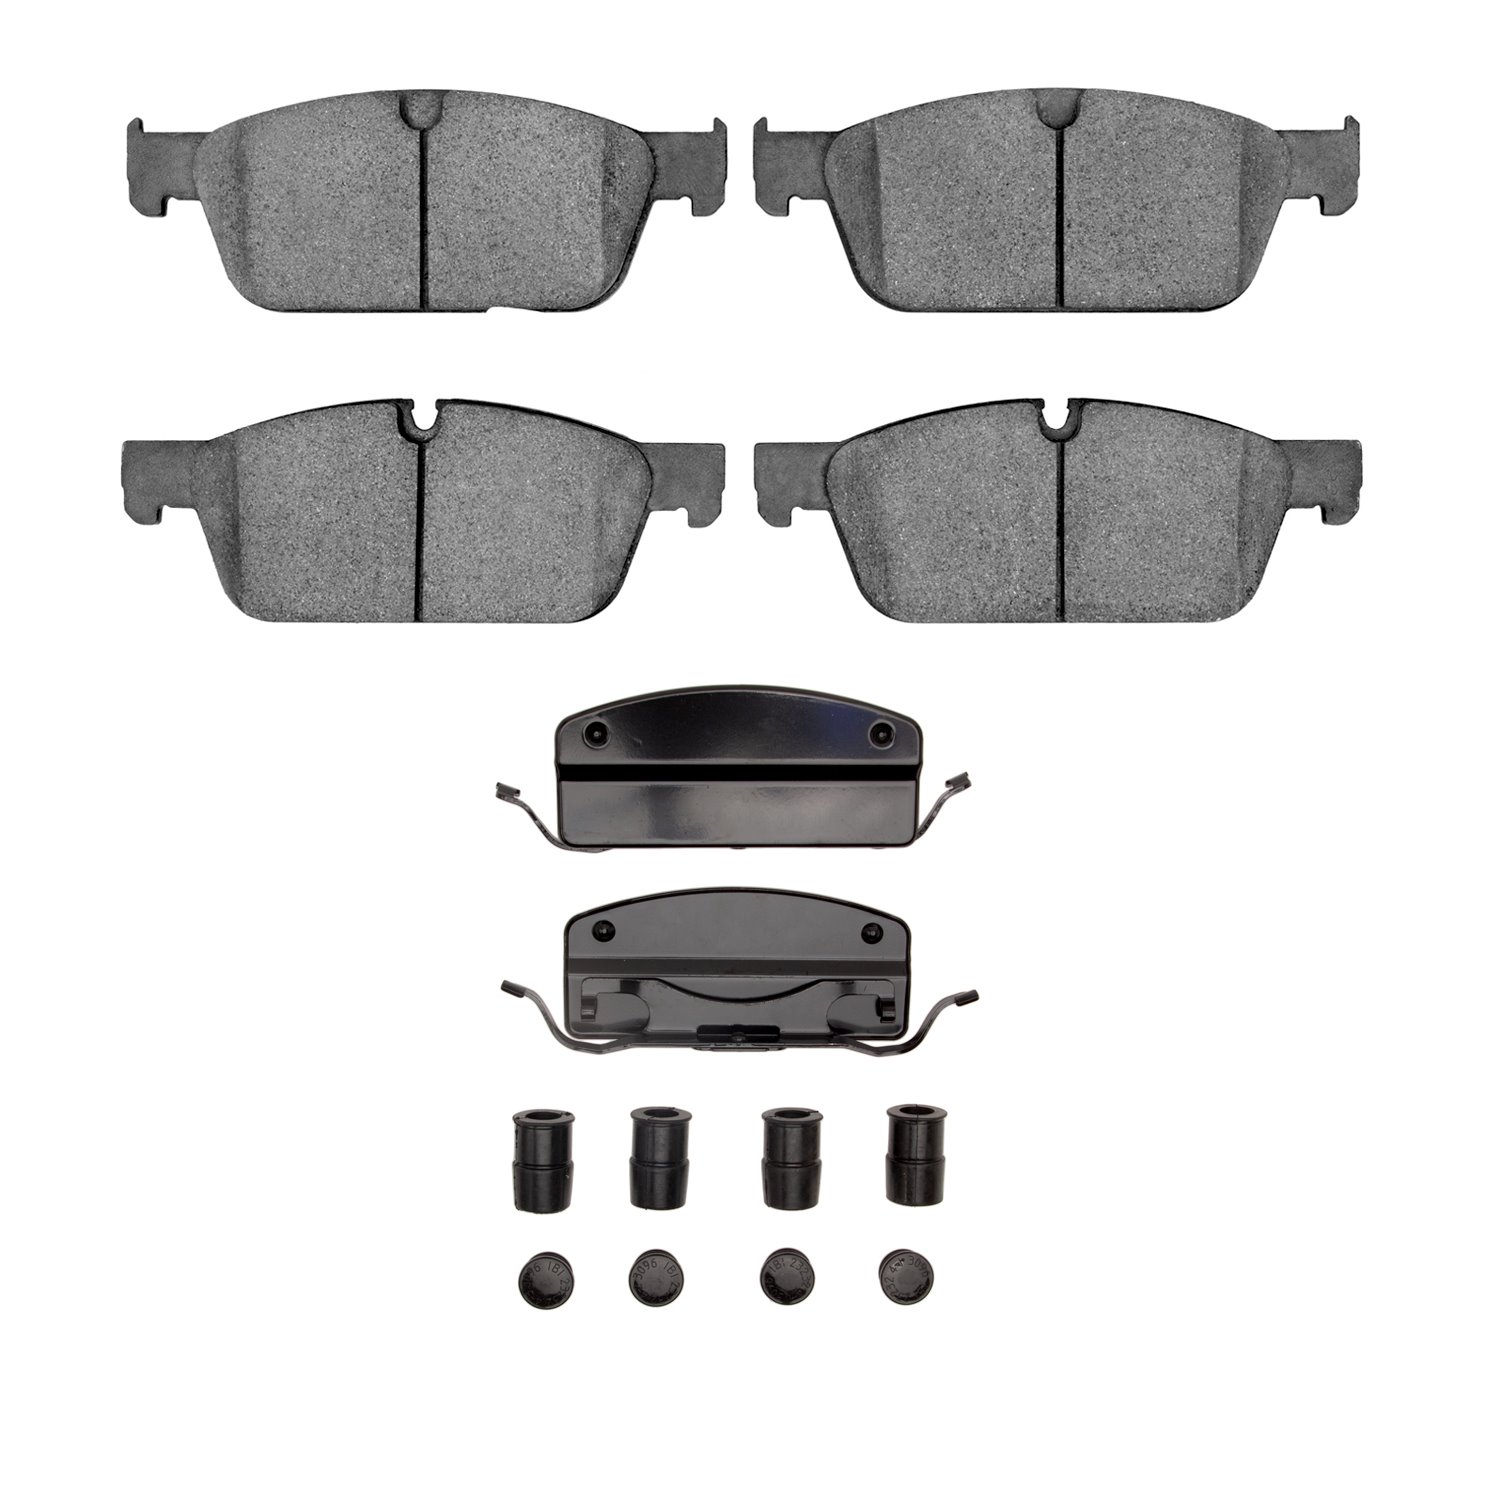 1600-1636-01 5000 Euro Ceramic Brake Pads & Hardware Kit, 2012-2014 Mercedes-Benz, Position: Front